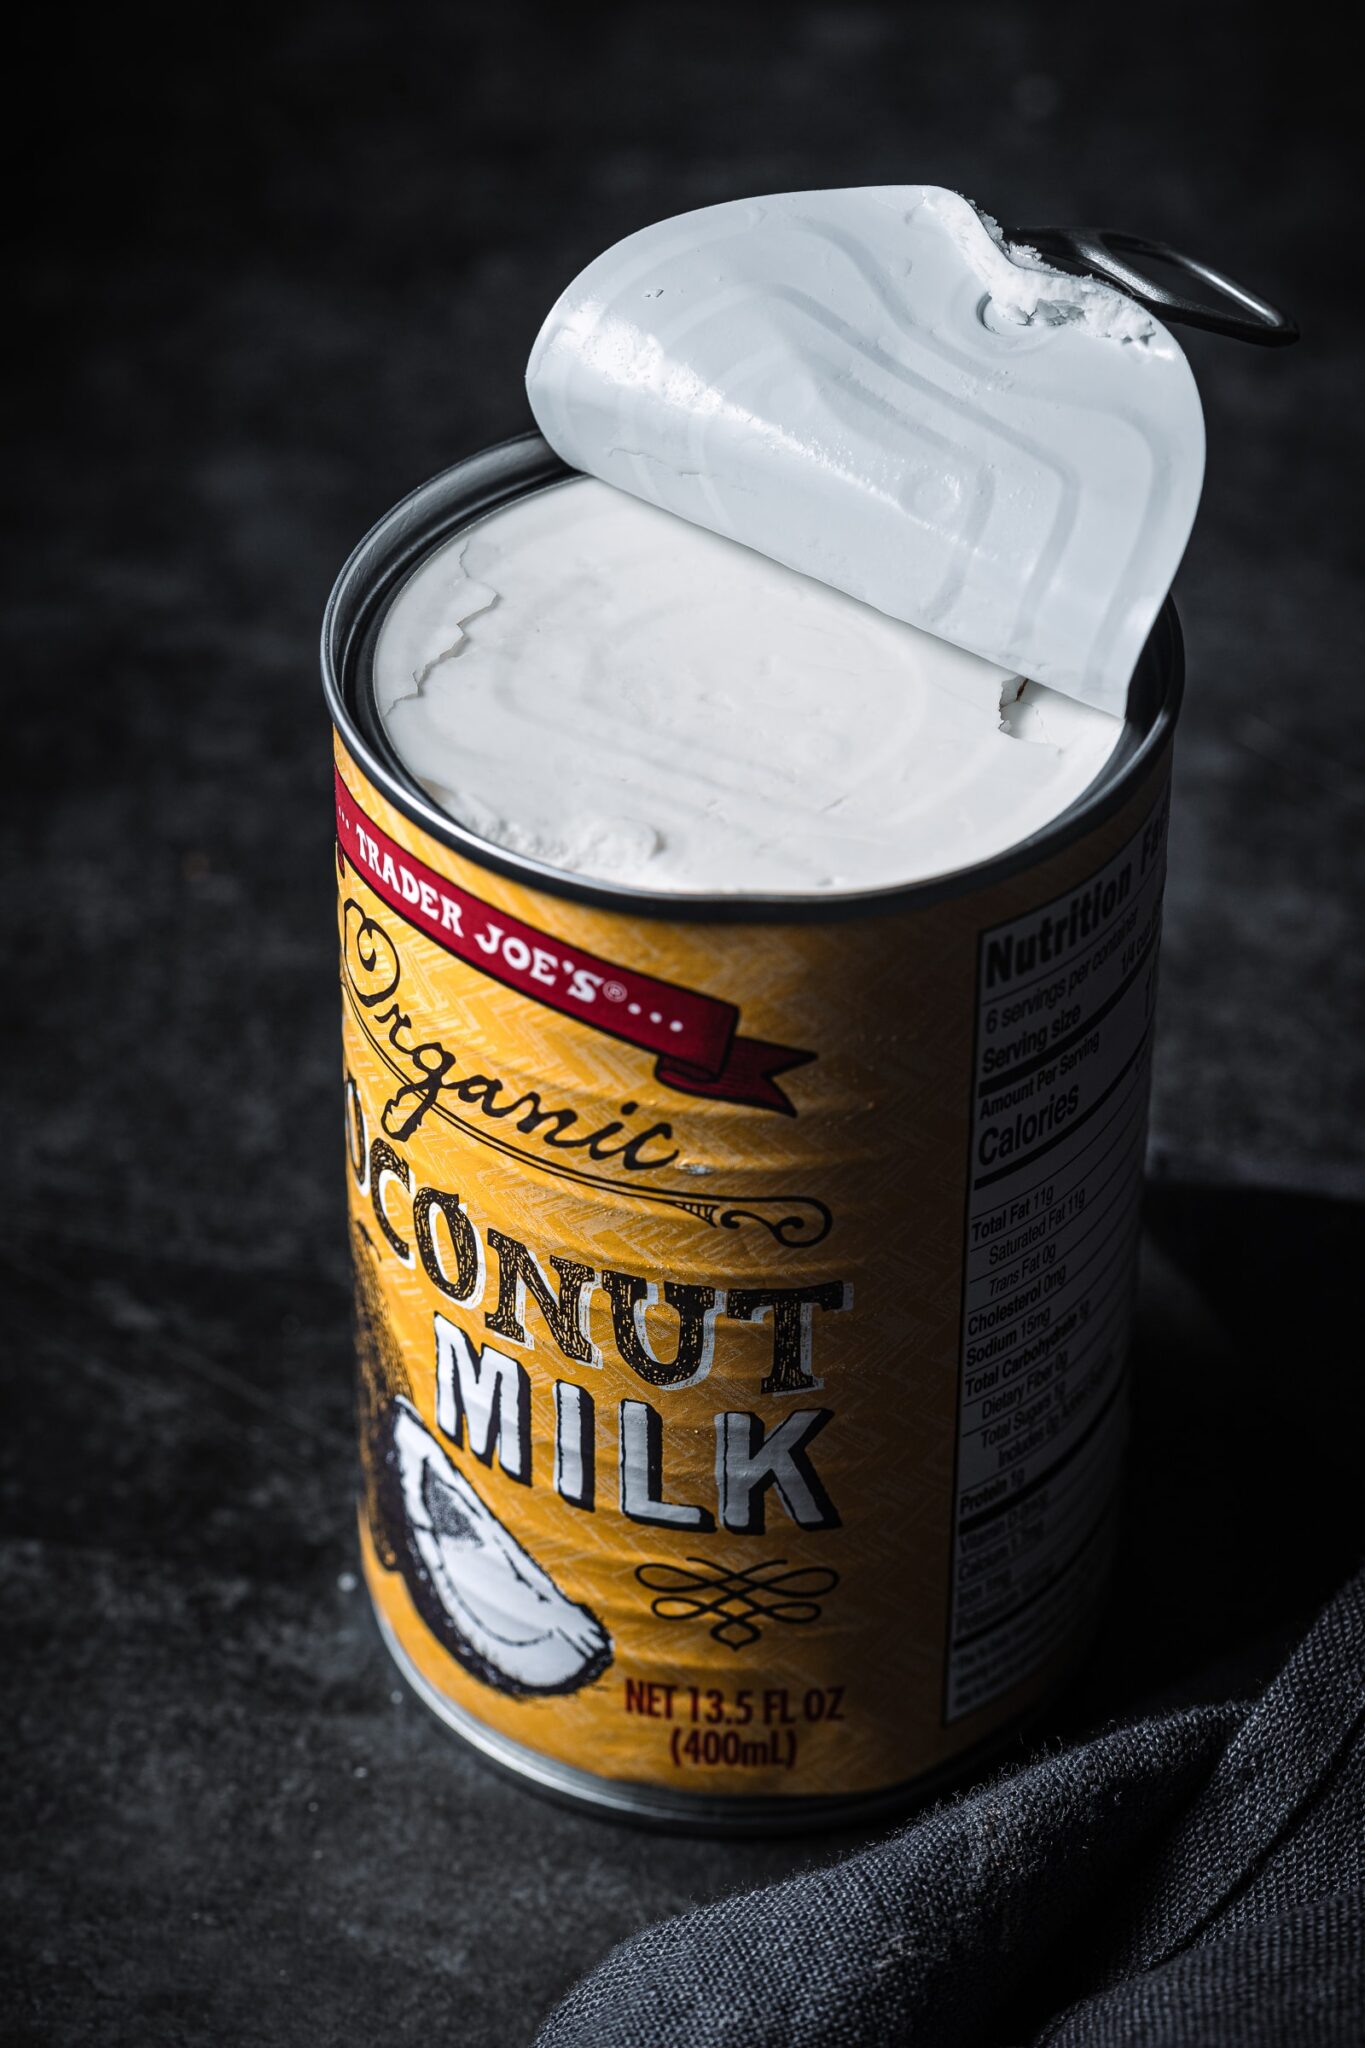 Open can of coconut milk.